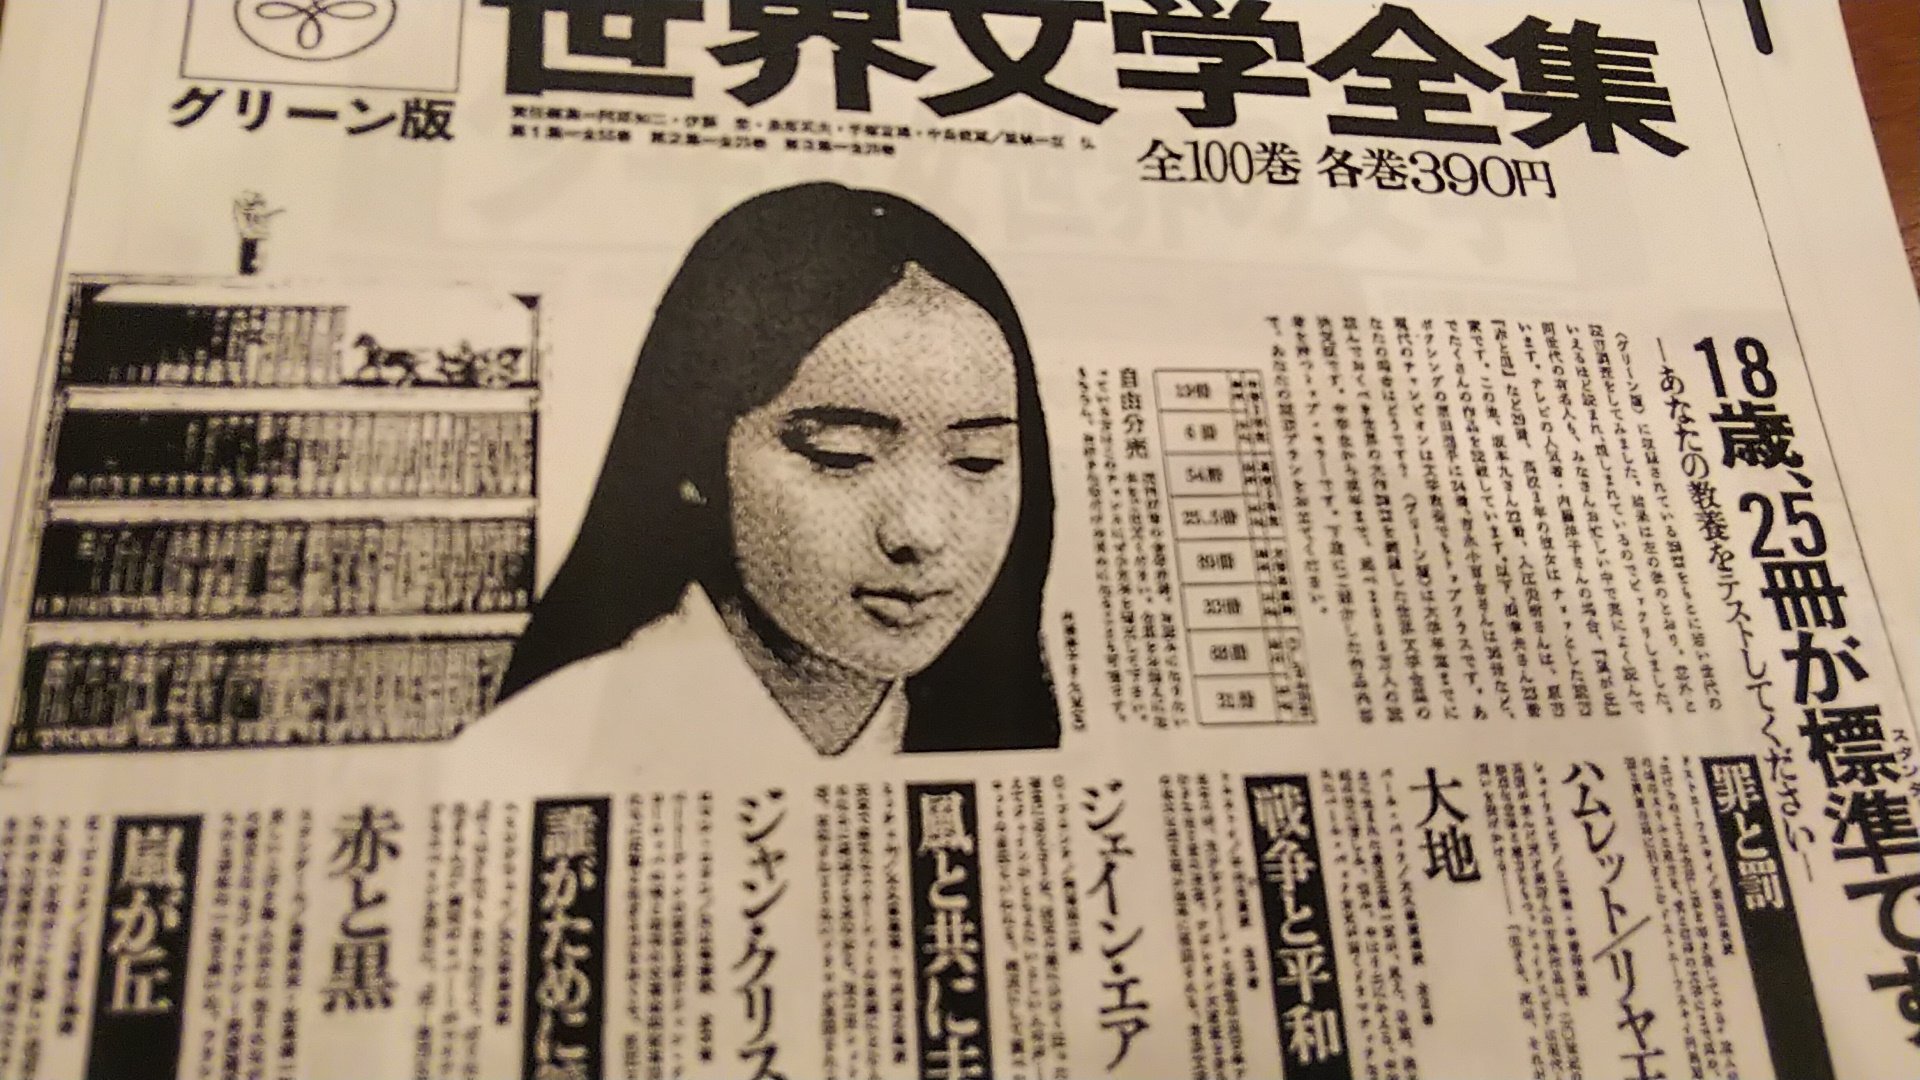 Shun Ichiro Akikusa 河出書房 世界文学全集 新聞広告 1966年 若い世代の読書 調査をしてみました 中略 同年代の有名人も みなさんお忙しい中で実によく読んでいます テレビの人気者 内藤洋子さんの場合 嵐が丘 赤と黒 など29冊 高校2